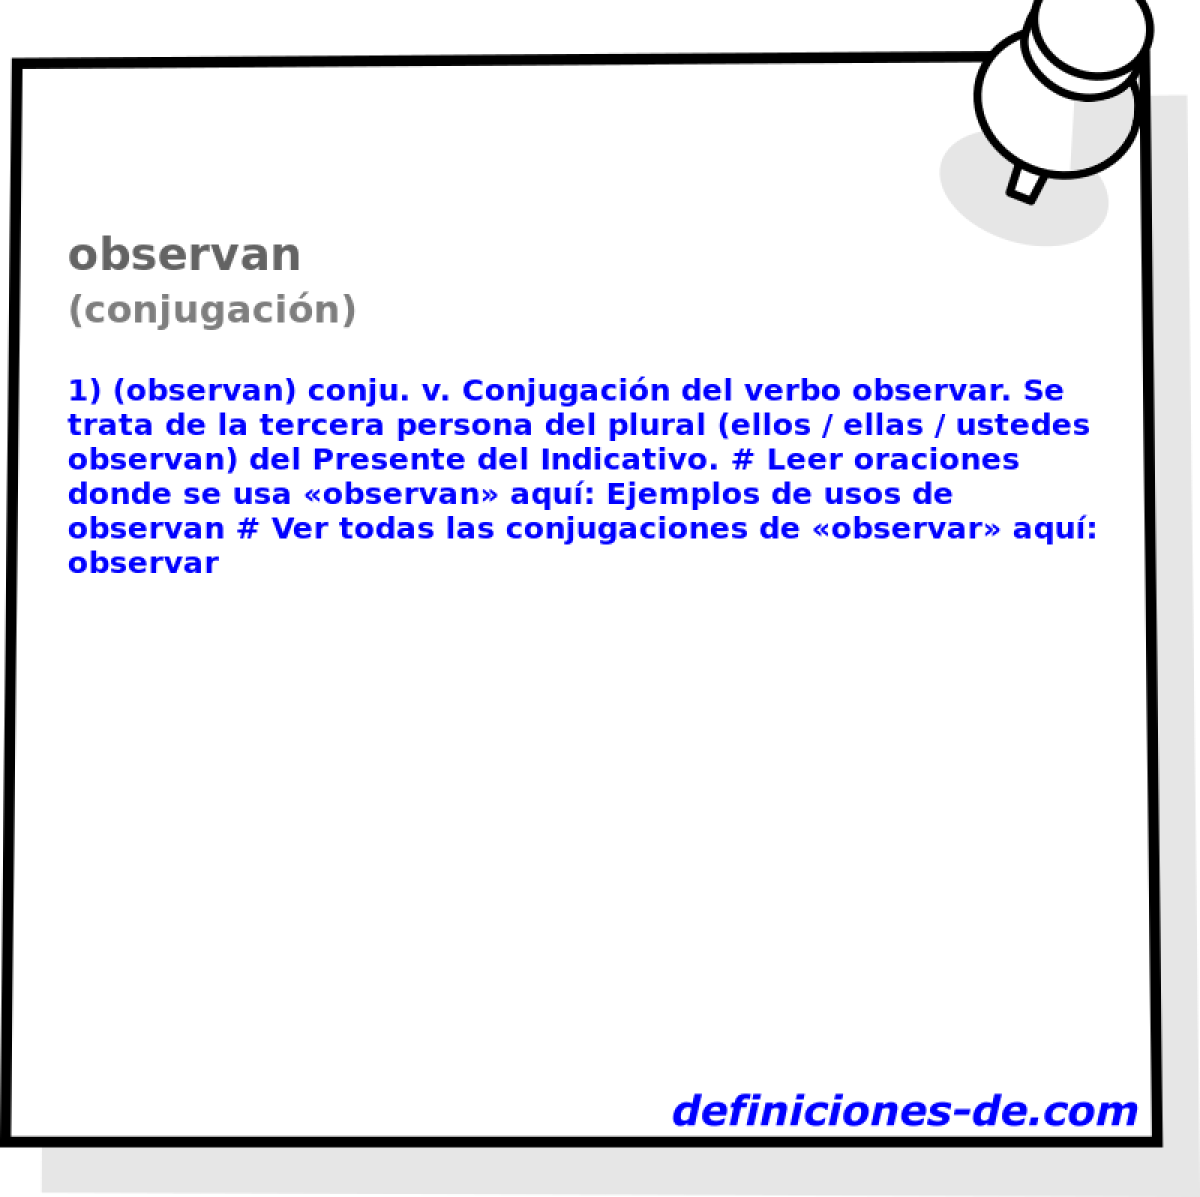 observan (conjugacin)